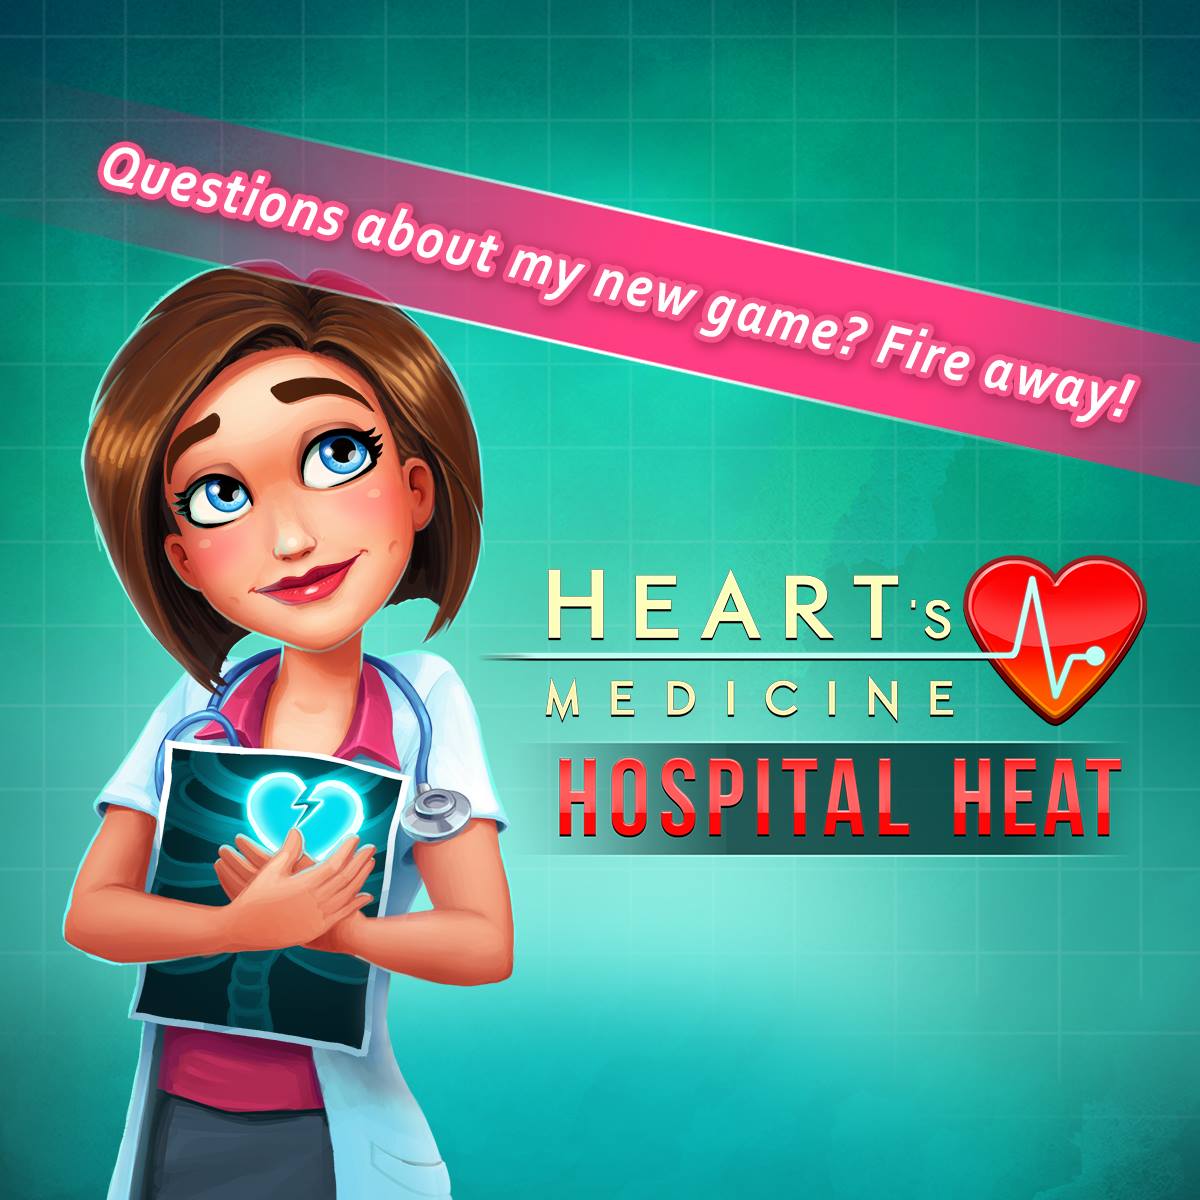 Hearts medicine hospital. Эллисон Харт Heart's Medicine. Эллисон Харт врач. Эллисон Харт Hospital Heat. Heart's Medicine - Hospital Heat.